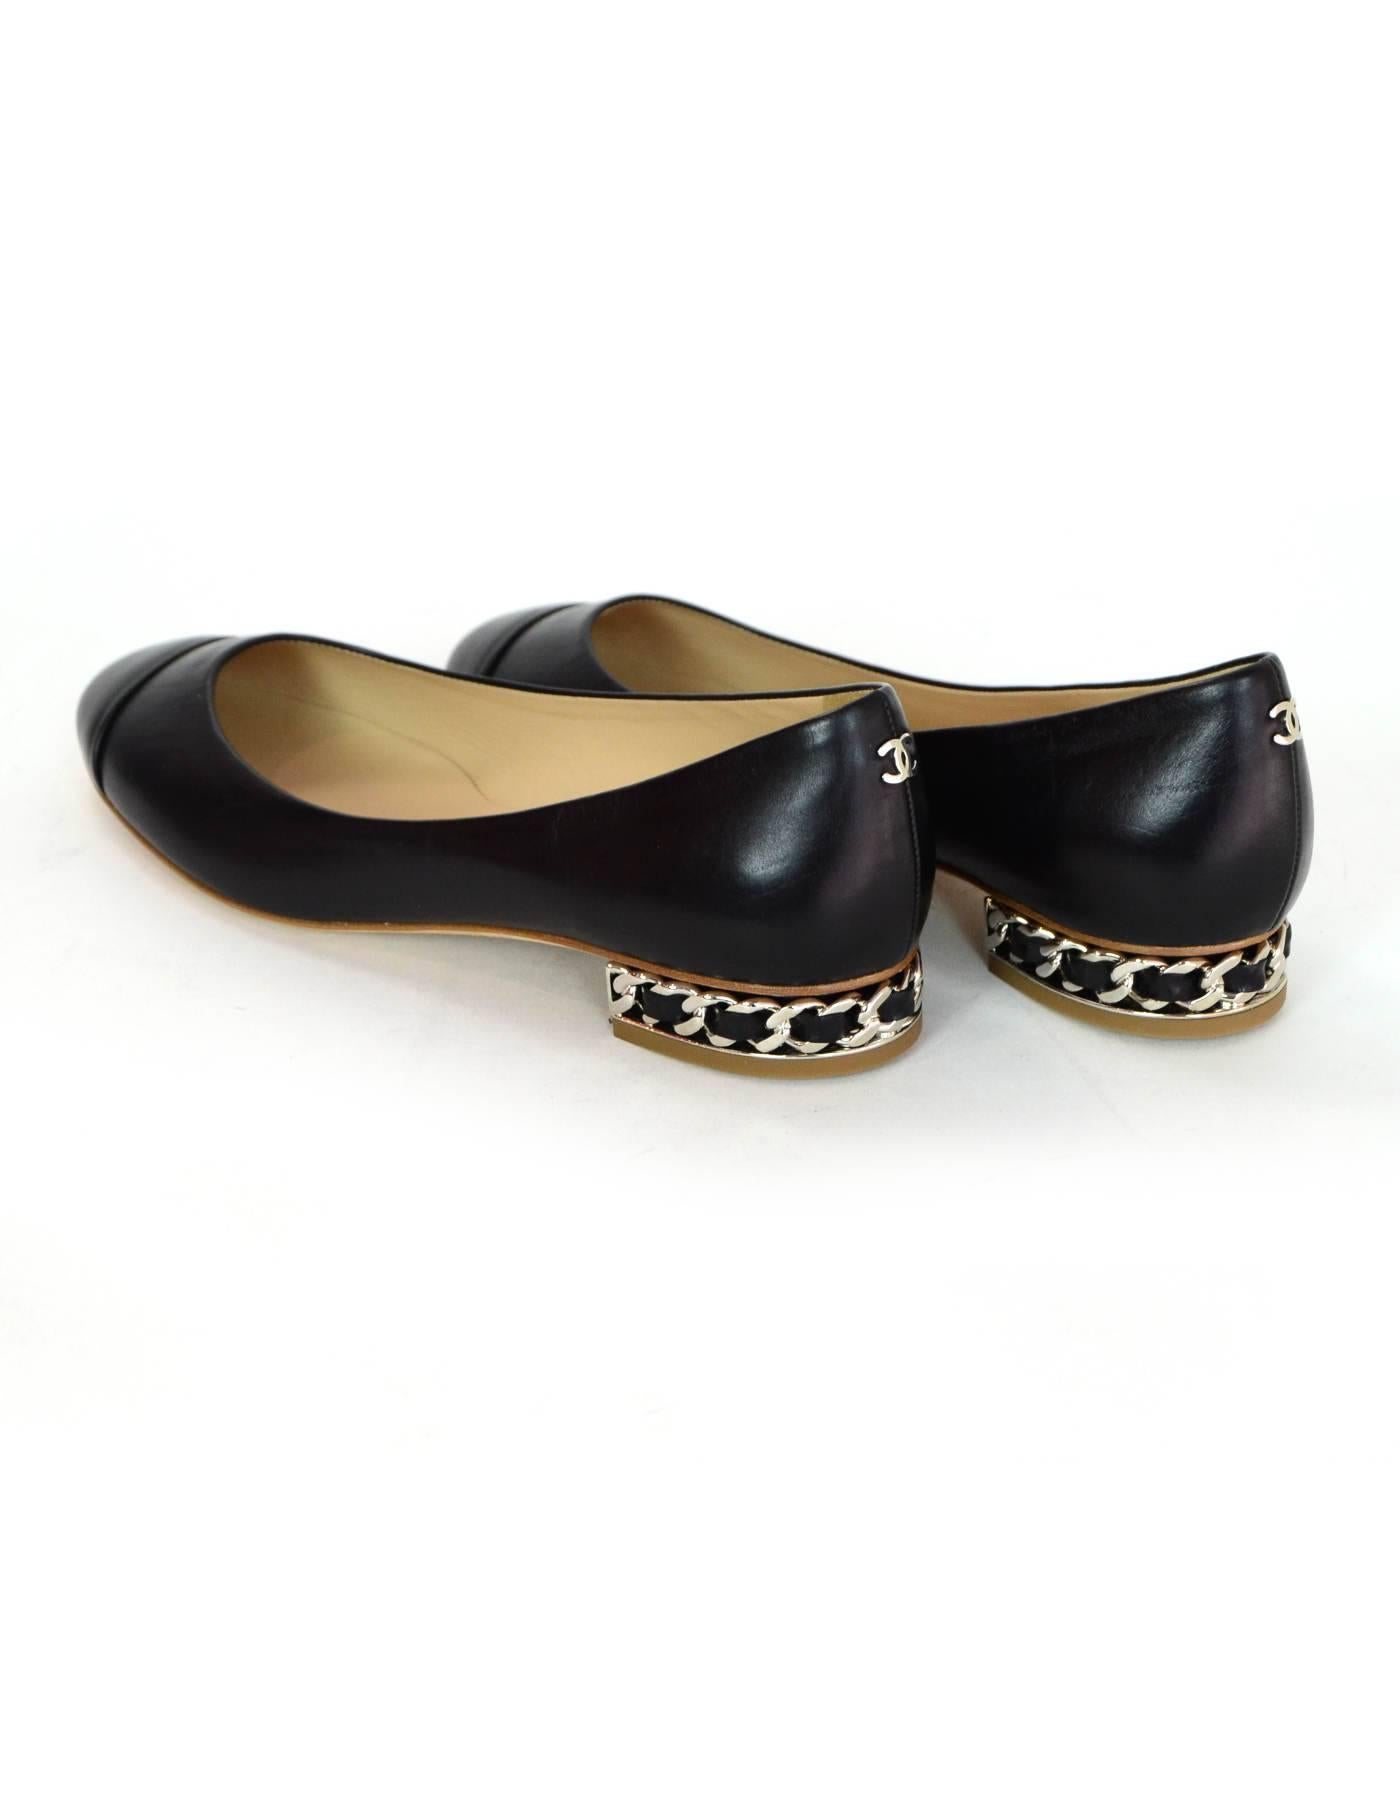 Women's Chanel Black Leather Flats with Chain Heels Sz 39 NIB